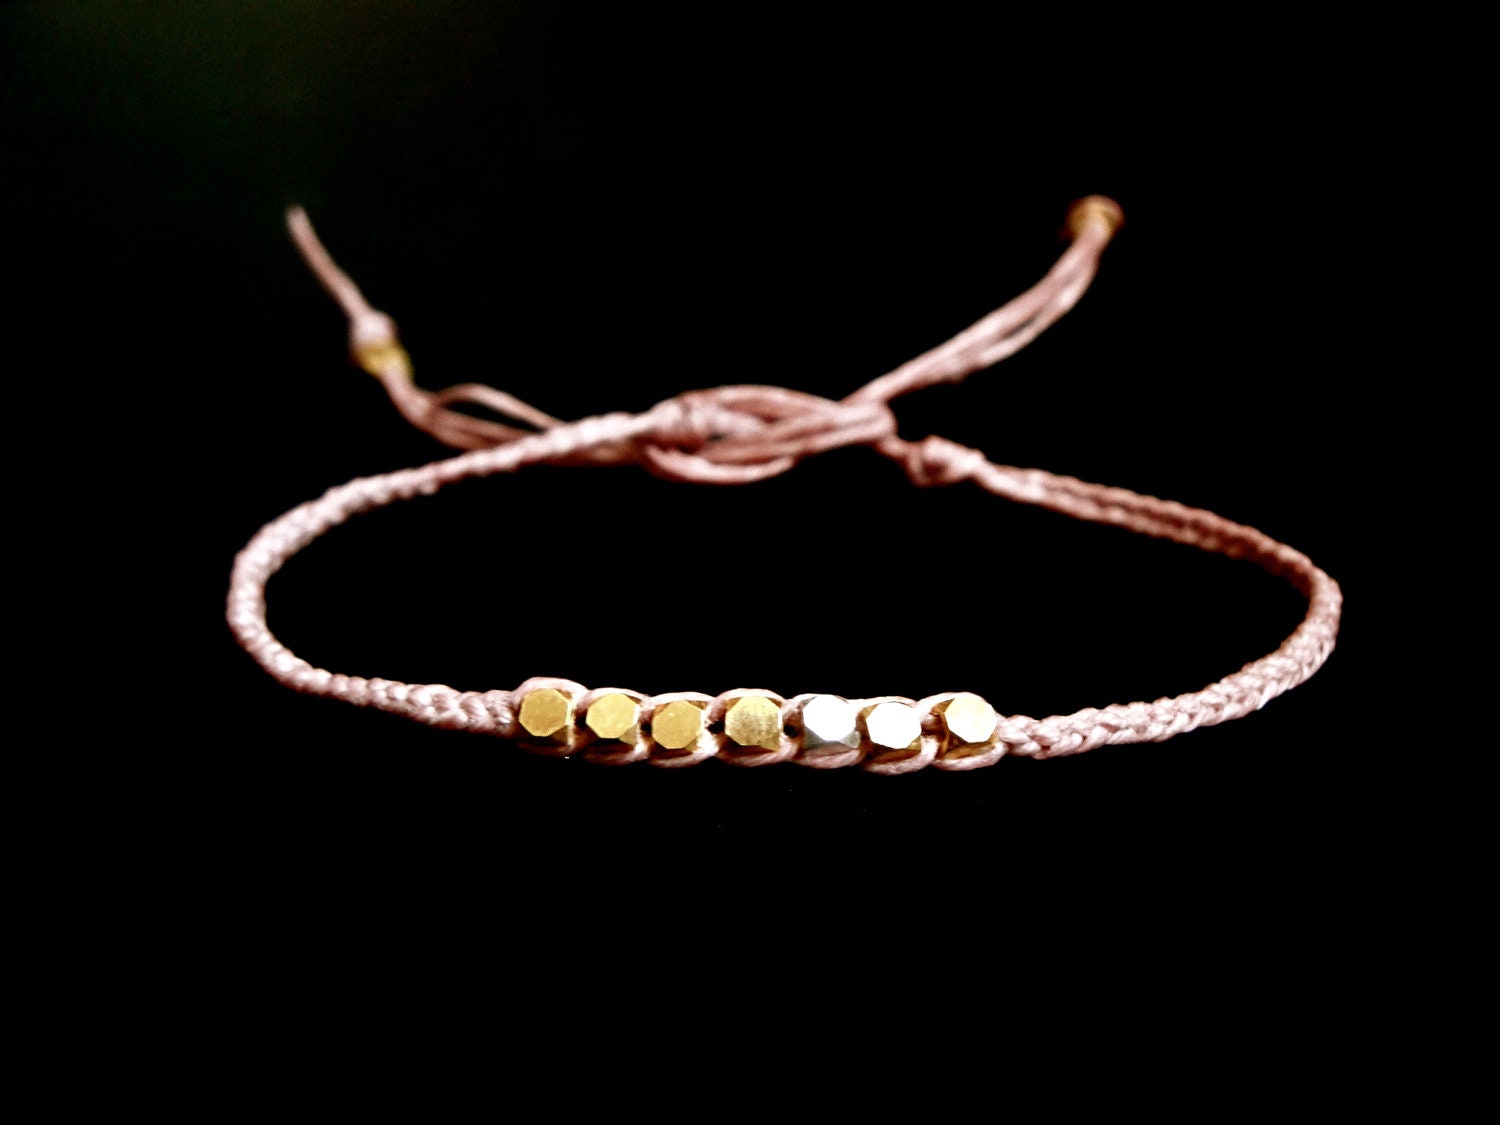 glam friendship bracelet - antique rose braided bracelet with faceted gold vermeil beads - aimeepawluk